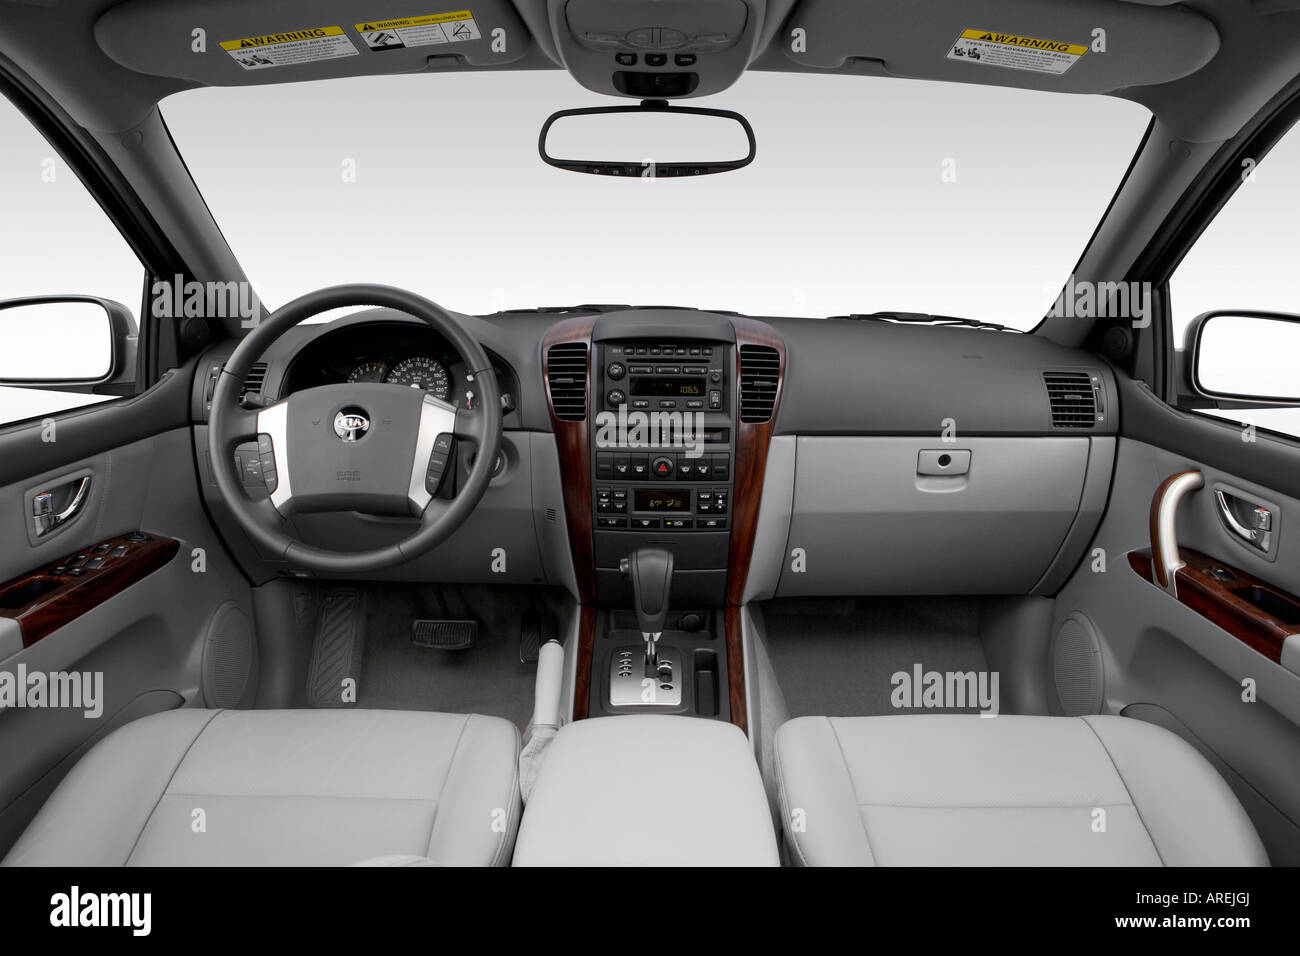 2006 Kia Sorento EX in Gray - Dashboard, center console, gear shifter view  Stock Photo - Alamy